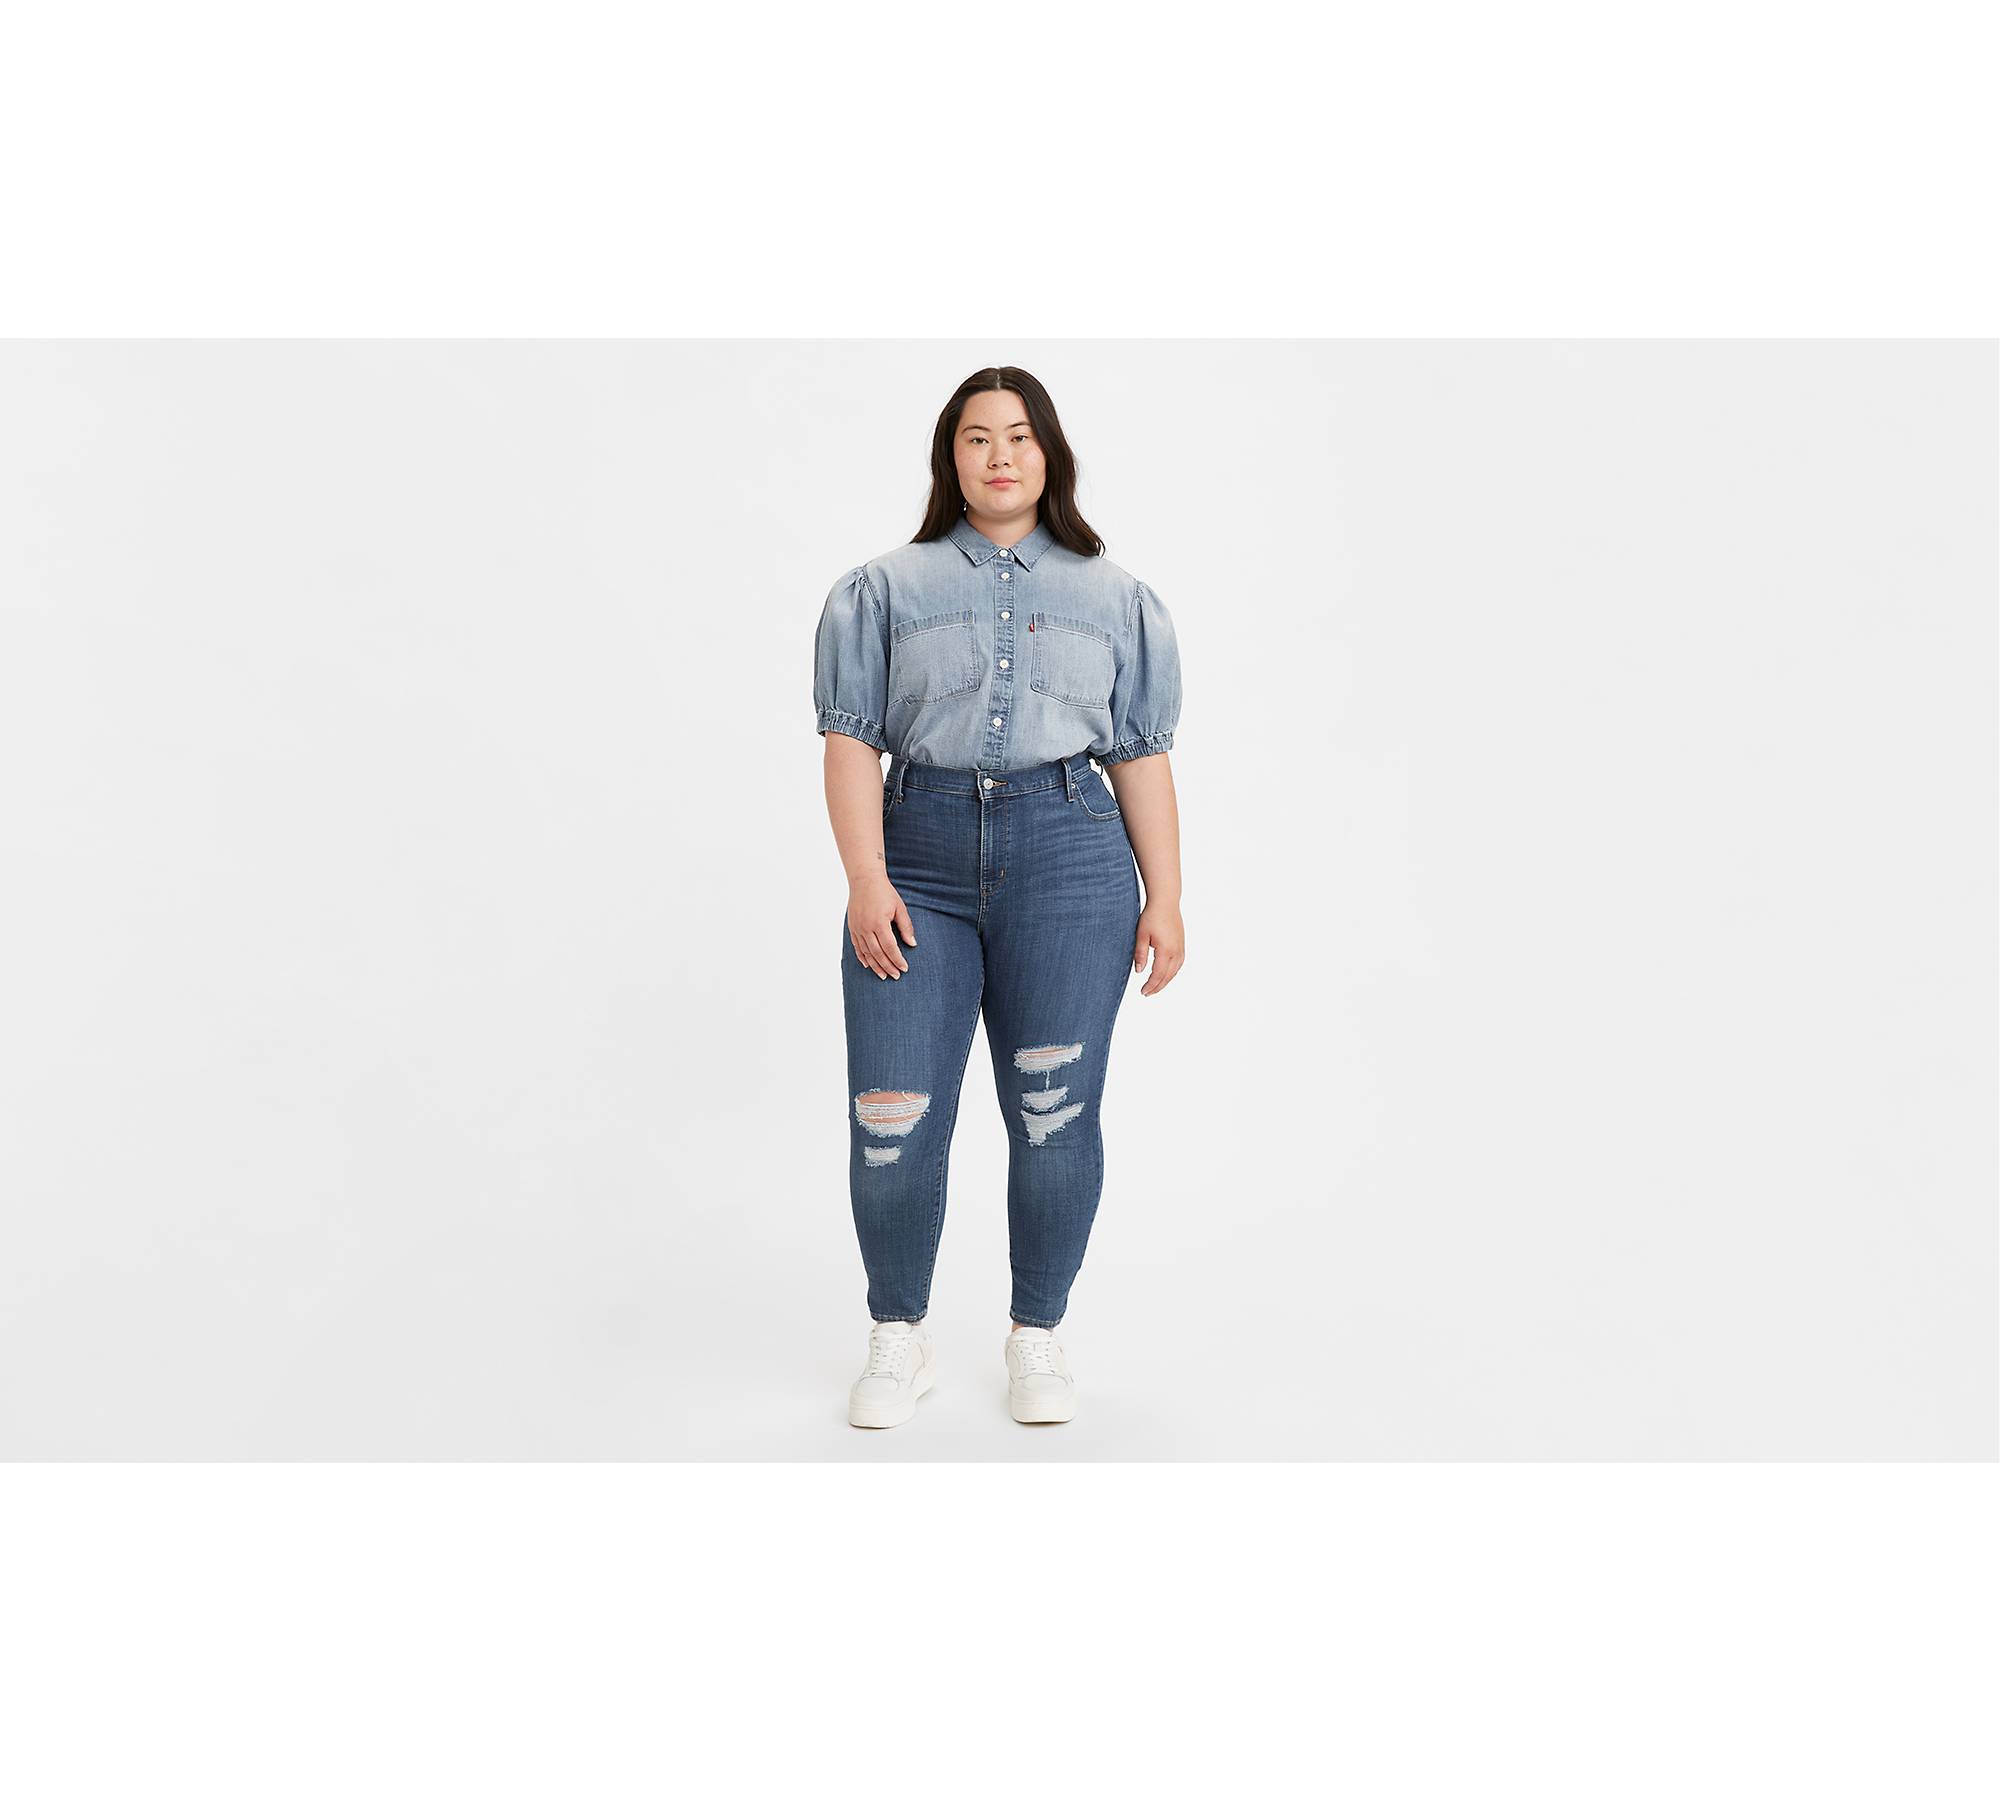 721 High Rise Skinny Women's Jeans (plus Size) - Medium Wash